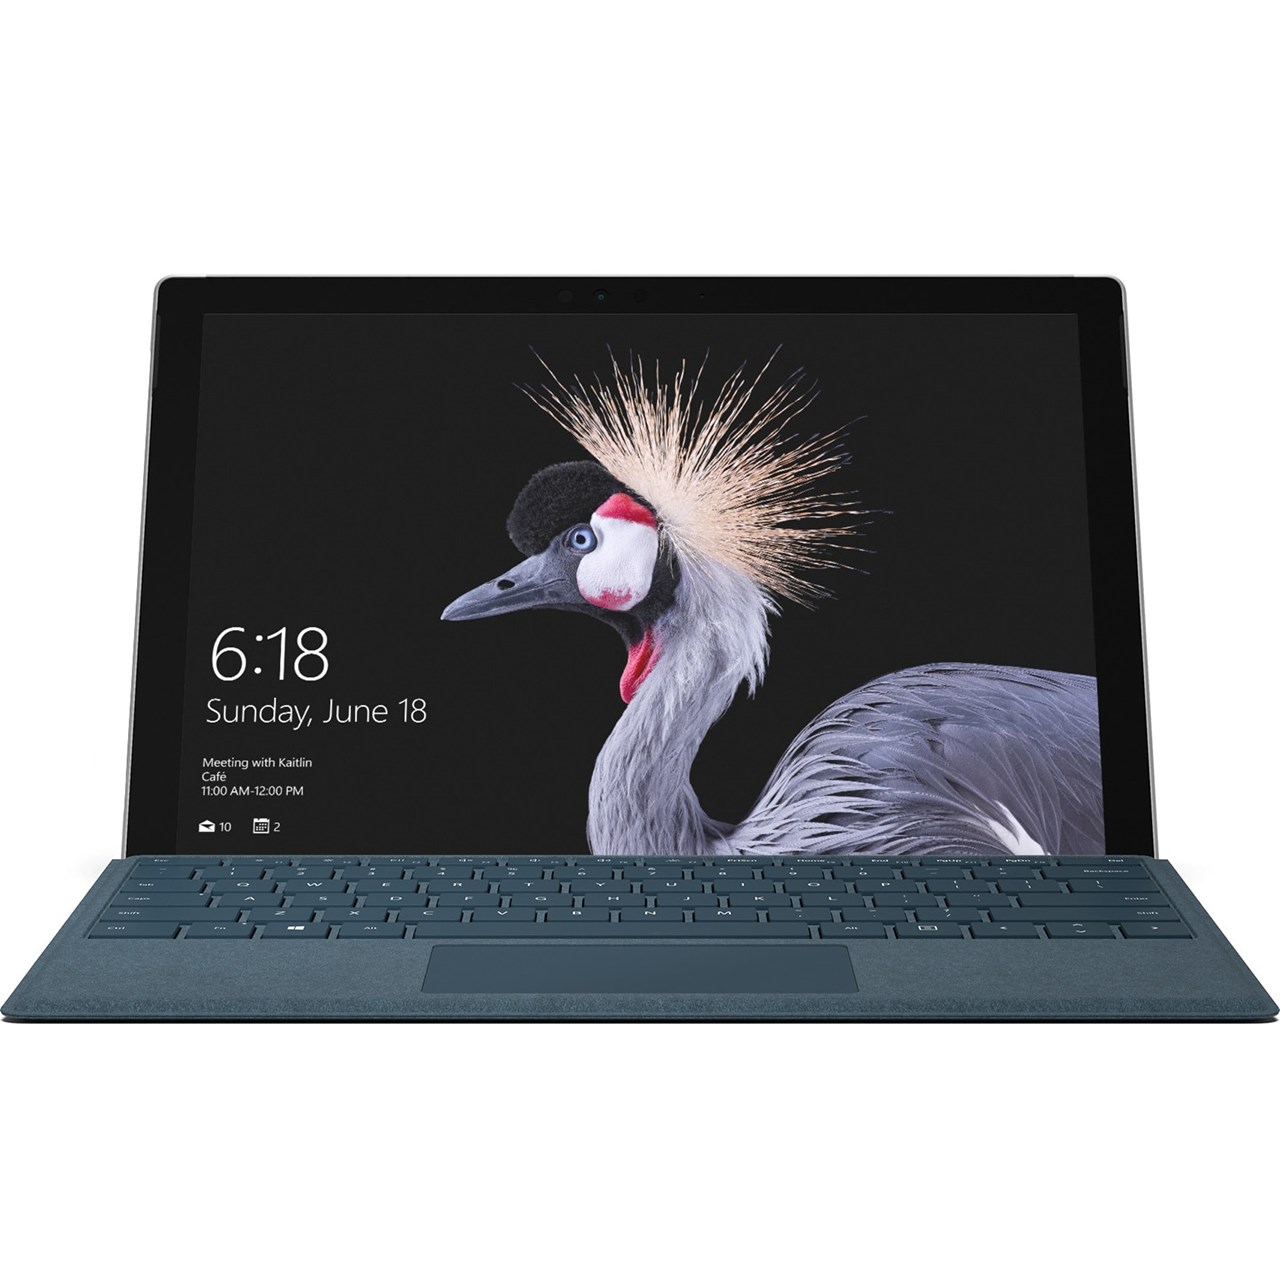 تبلت مایکروسافت مدل Surface Pro 2017 - C به همراه کیبورد Blue Cobalt Signature Type Cover - ظرفیت 256 گیگابایت